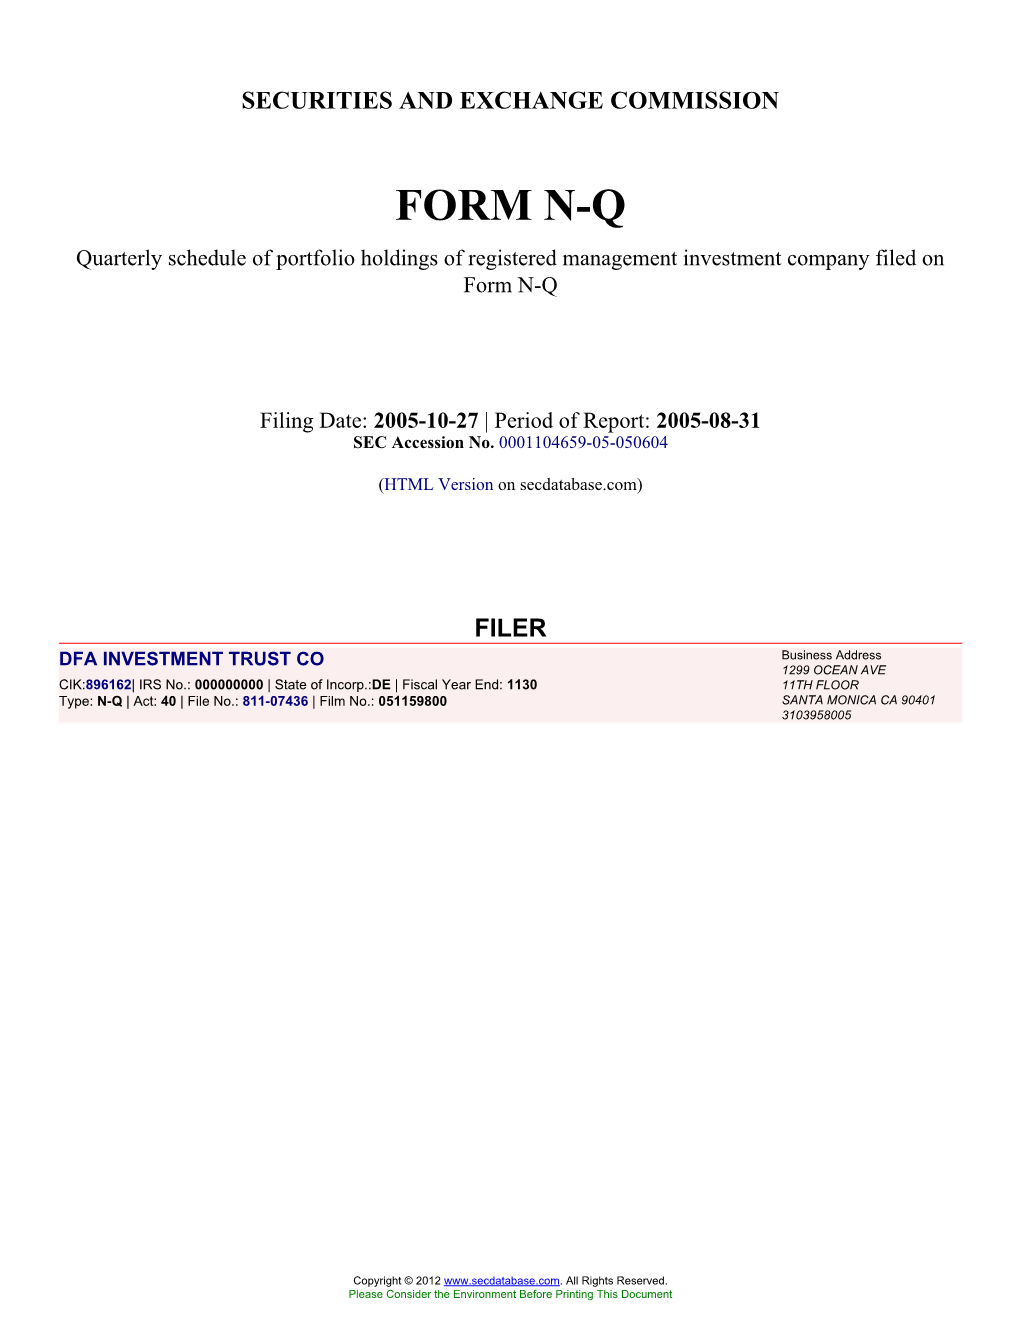 DFA INVESTMENT TRUST CO (Form: N-Q, Filing Date: 10/27/2005)